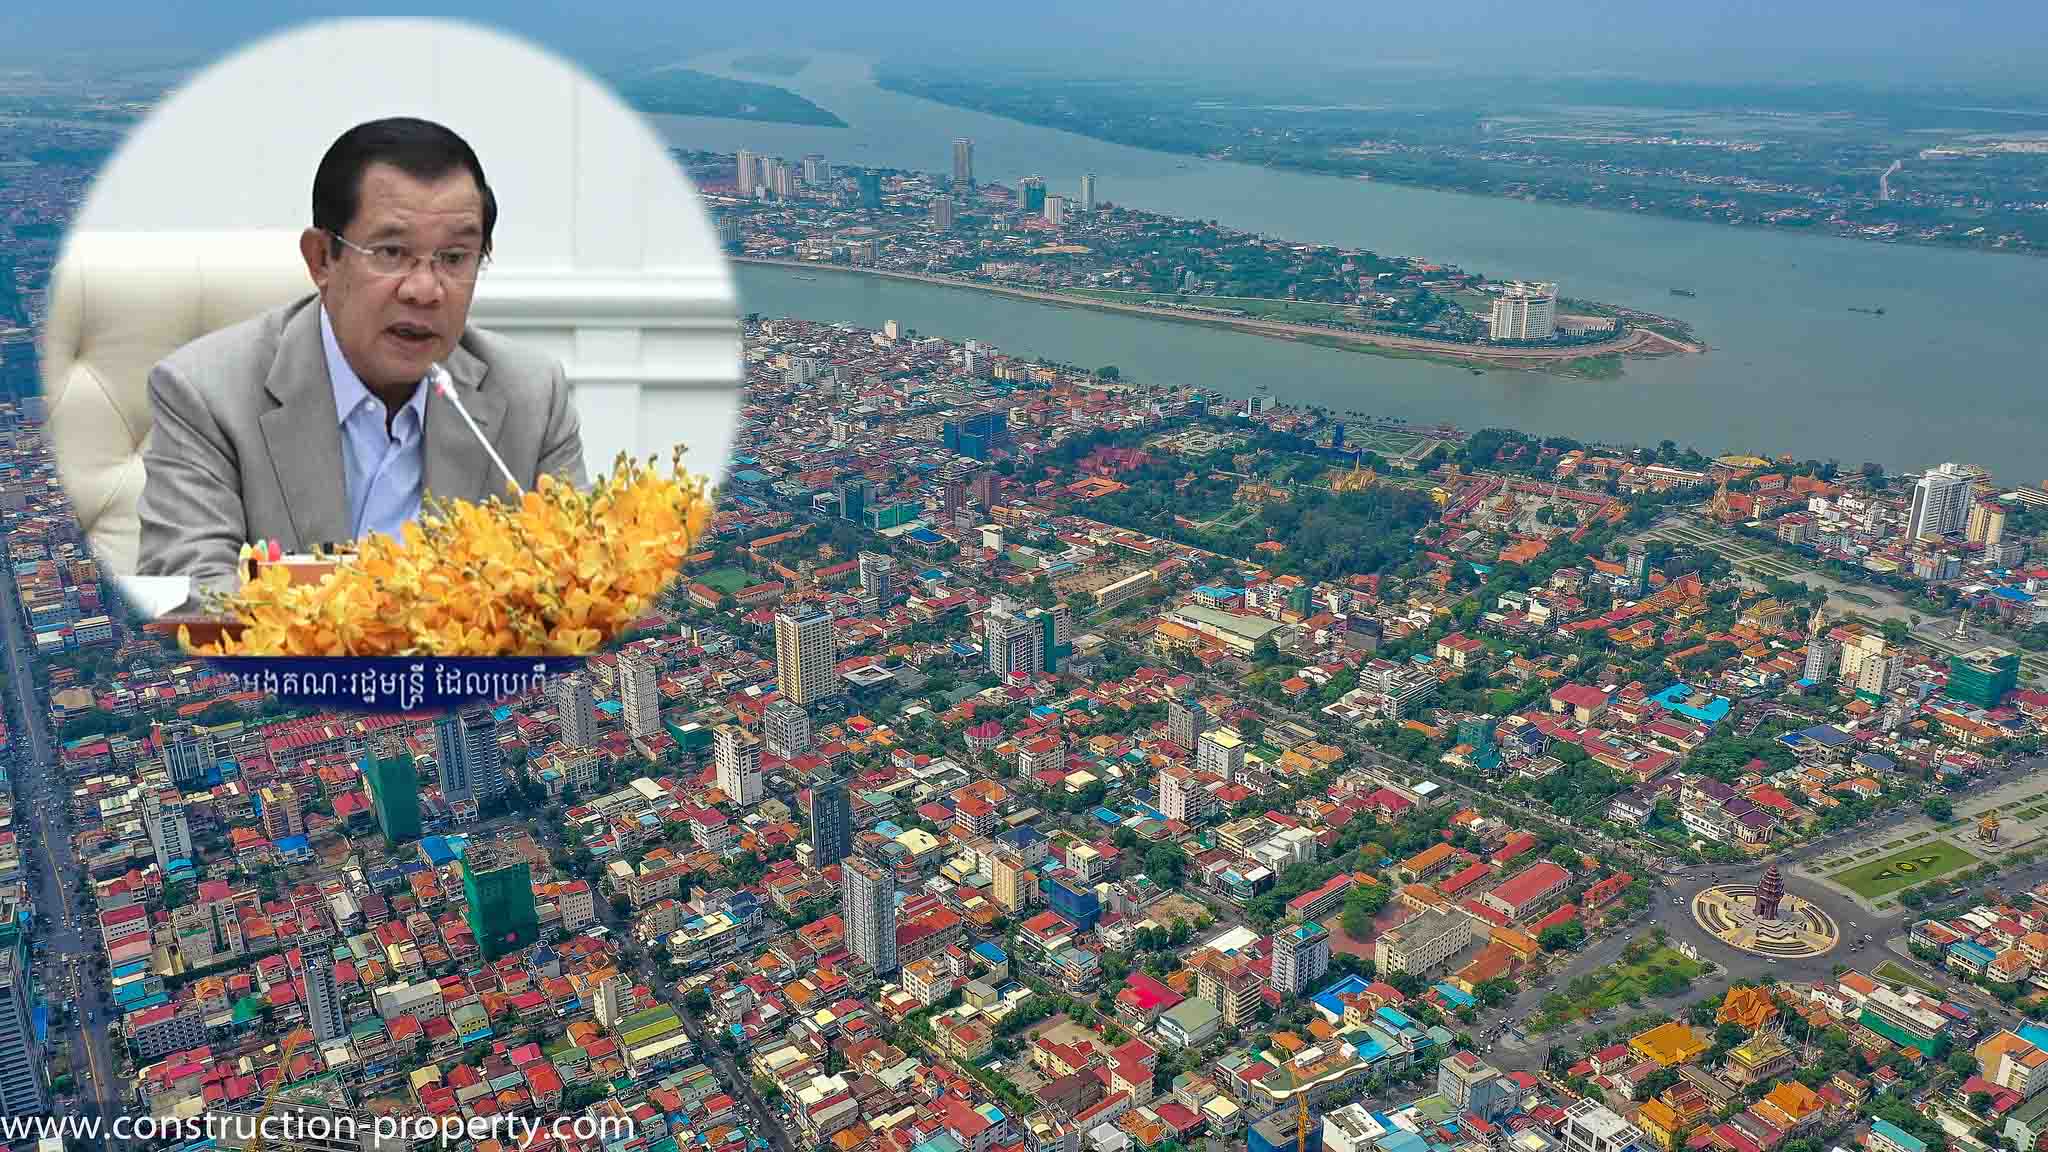 Samdech Techo Hun Sen: Phnom Penh has doubled in size